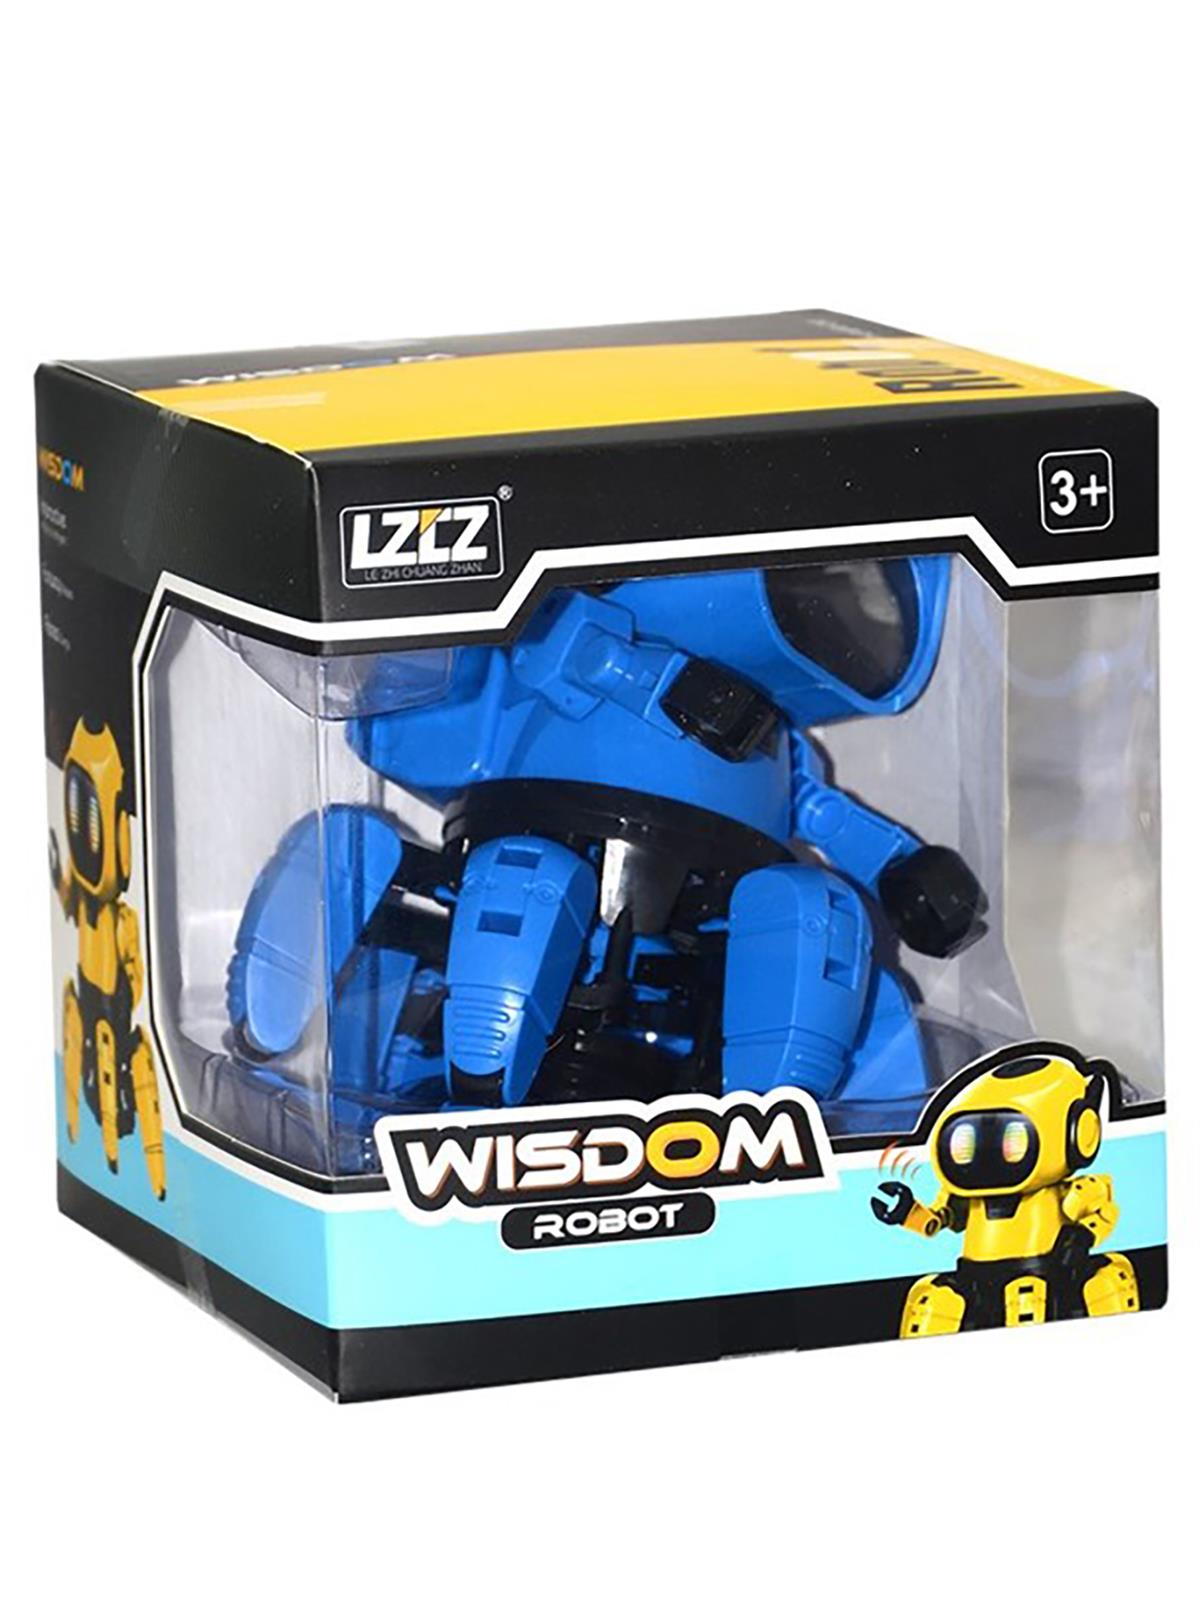 Can Oyuncak Wisdom Smart Robot Mavi